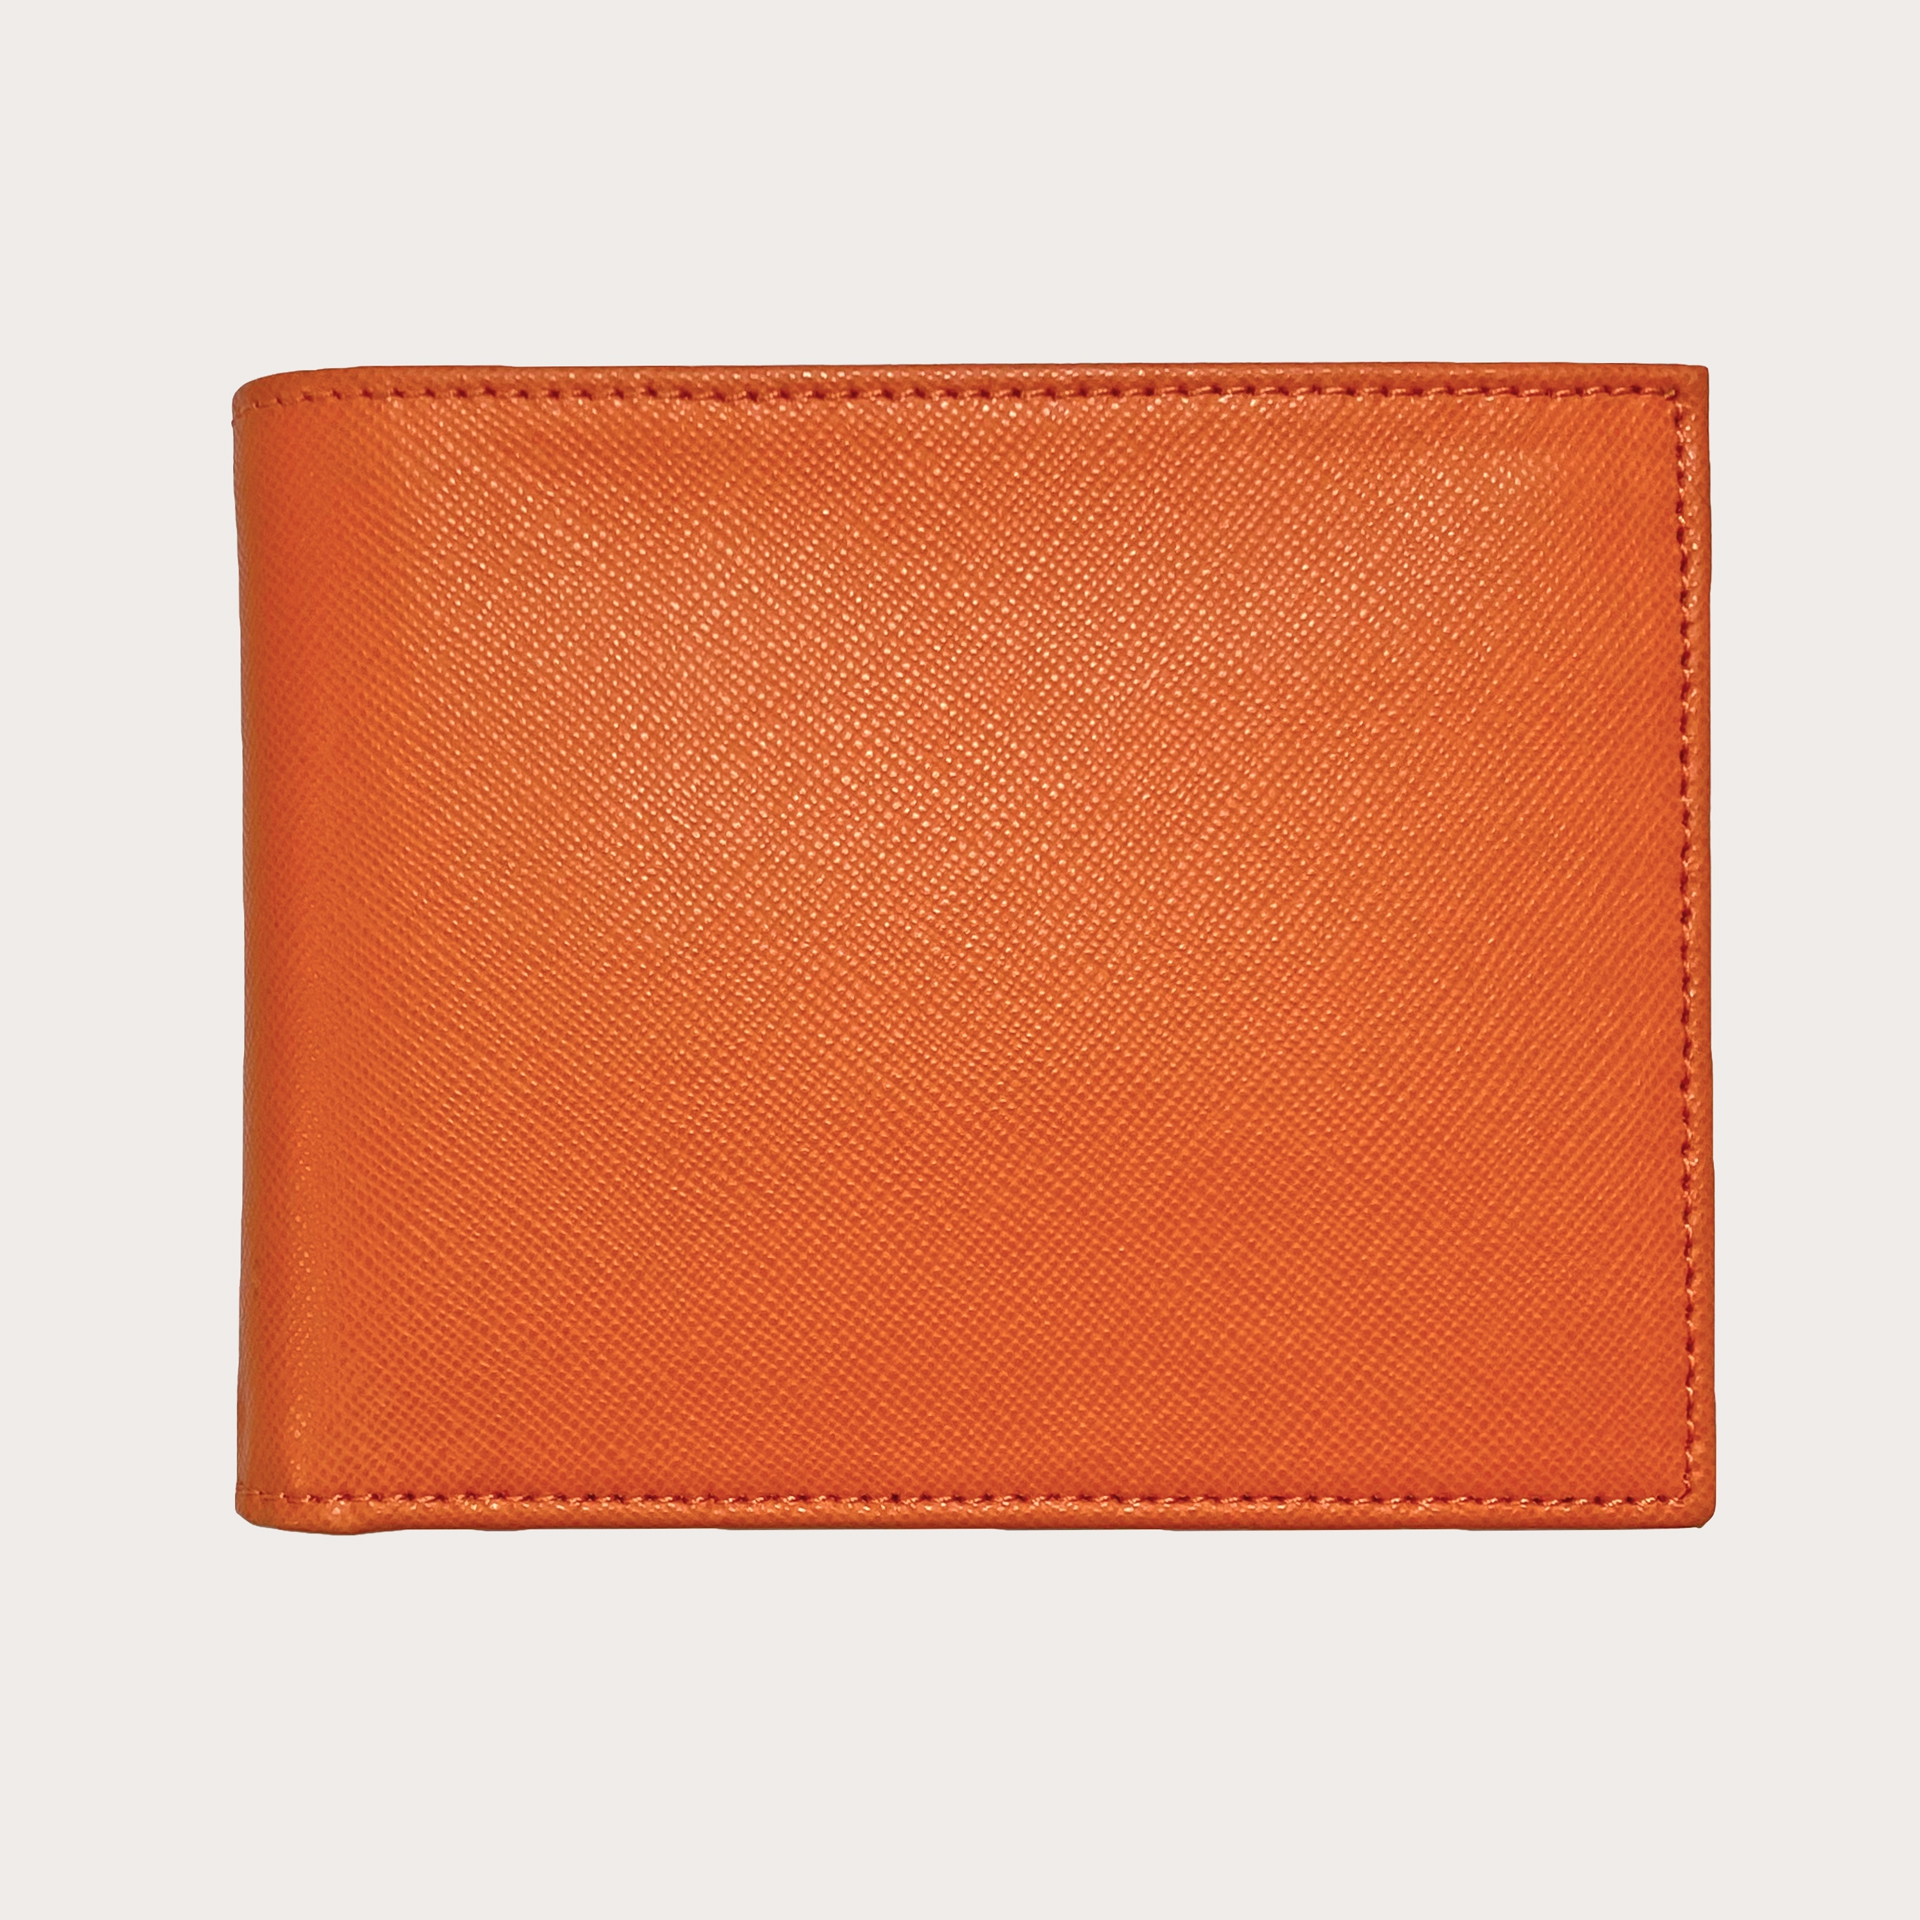 Burberry Men's Leather Wallet Sale Online, SAVE 30